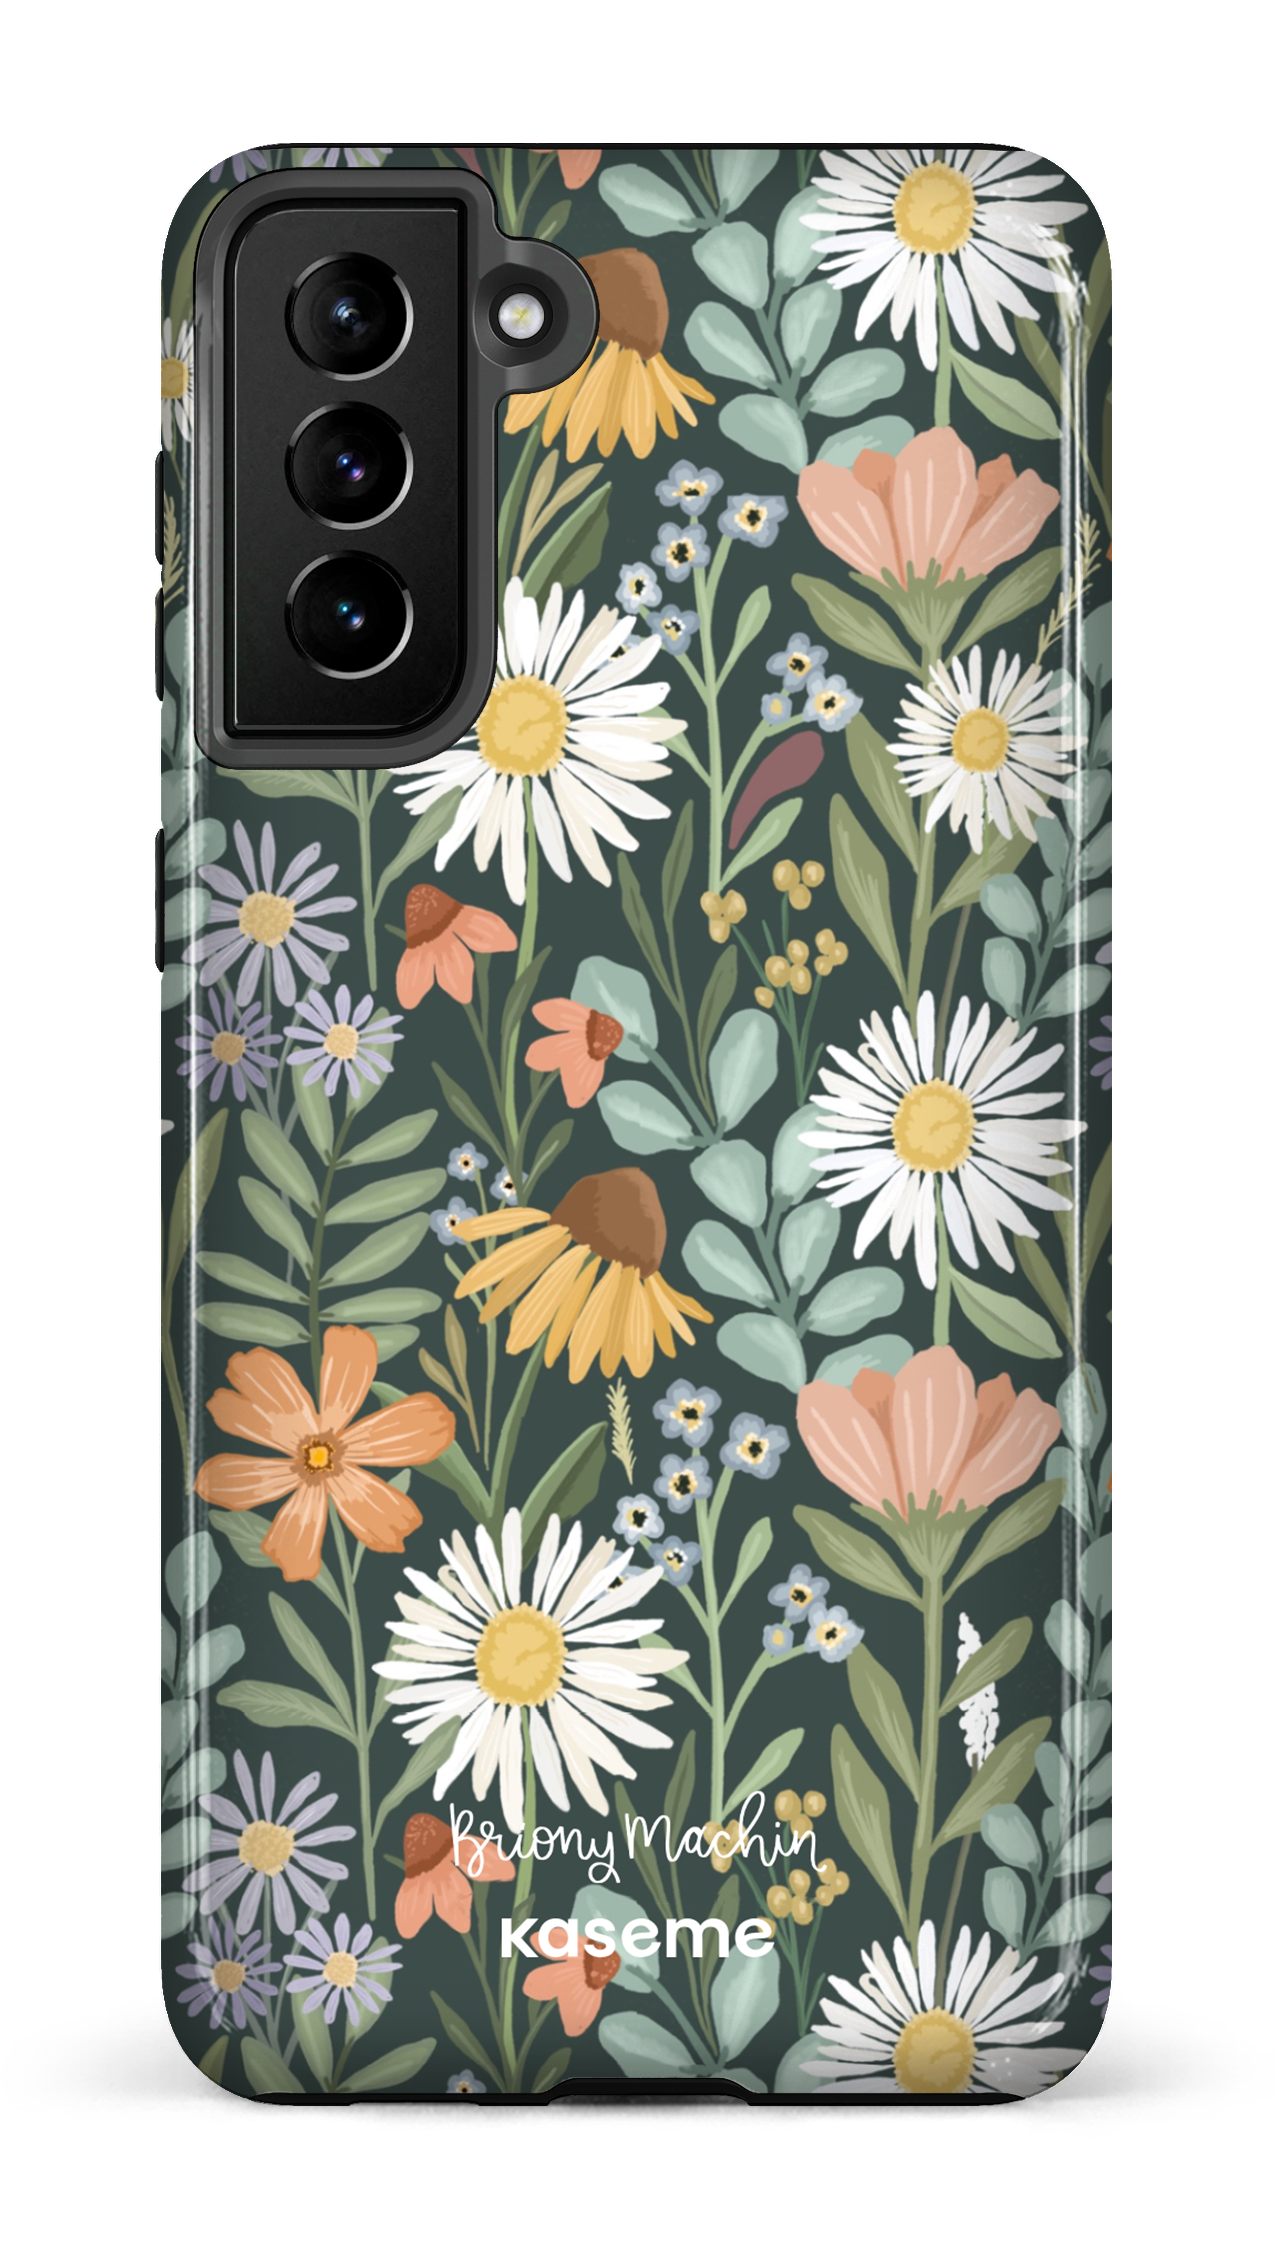 Sending Flowers Green by Briony Machin - Galaxy S21 Plus